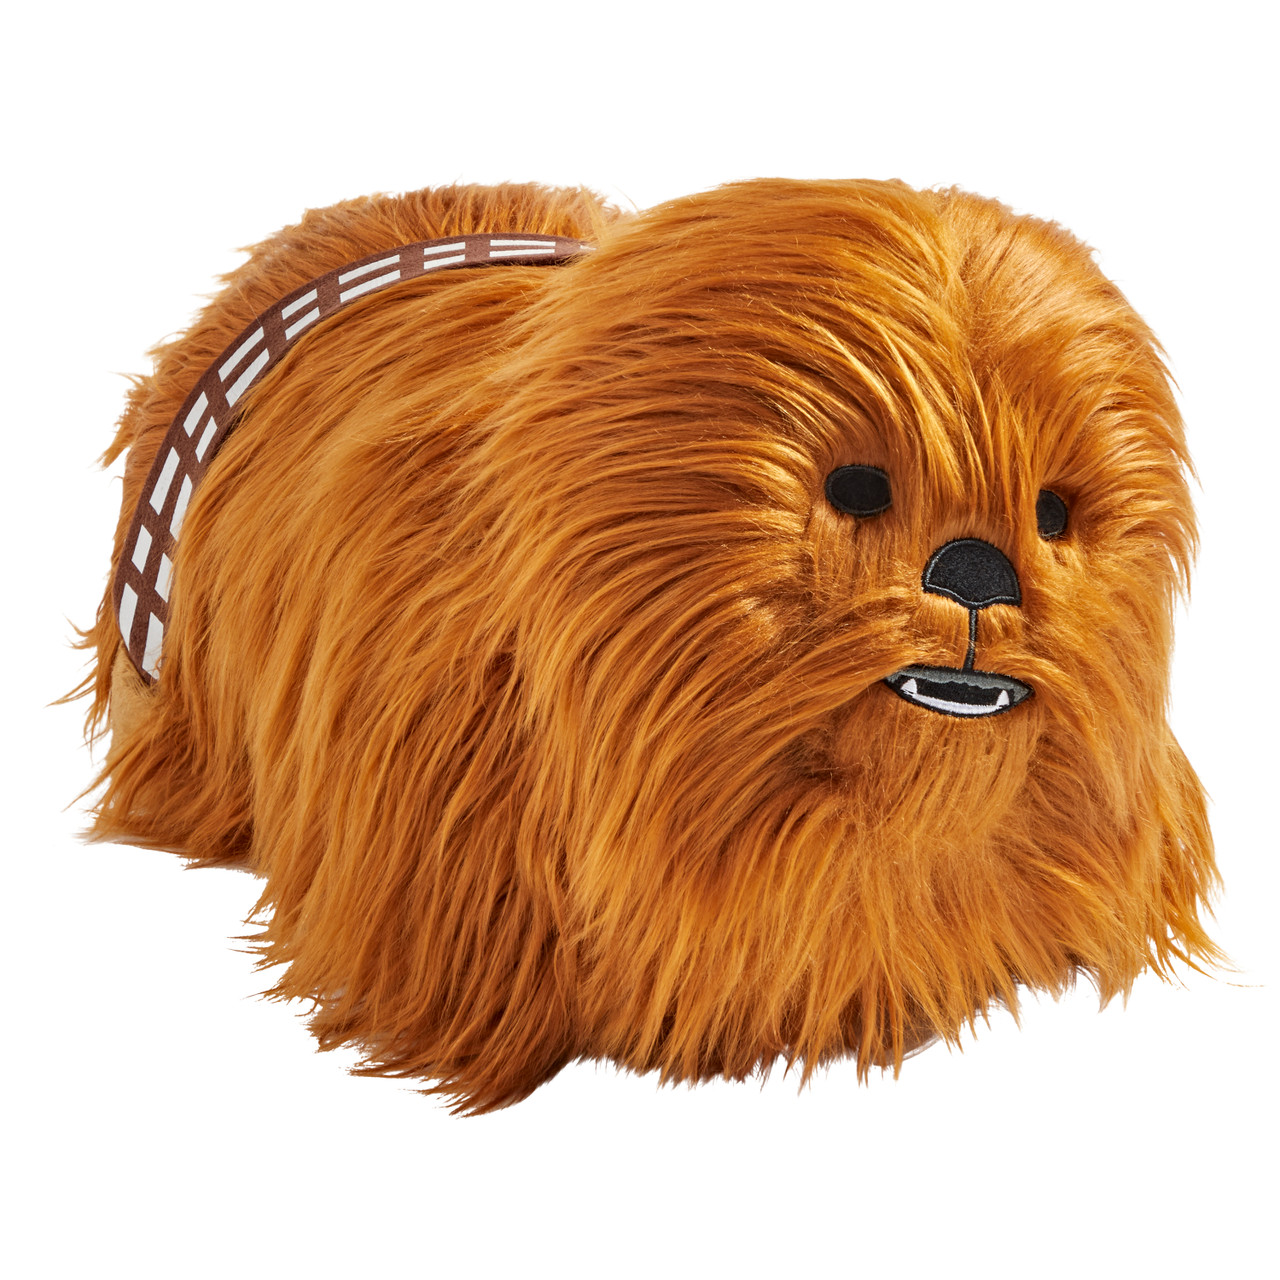 Star Wars Chewbacca - 16inch Large 